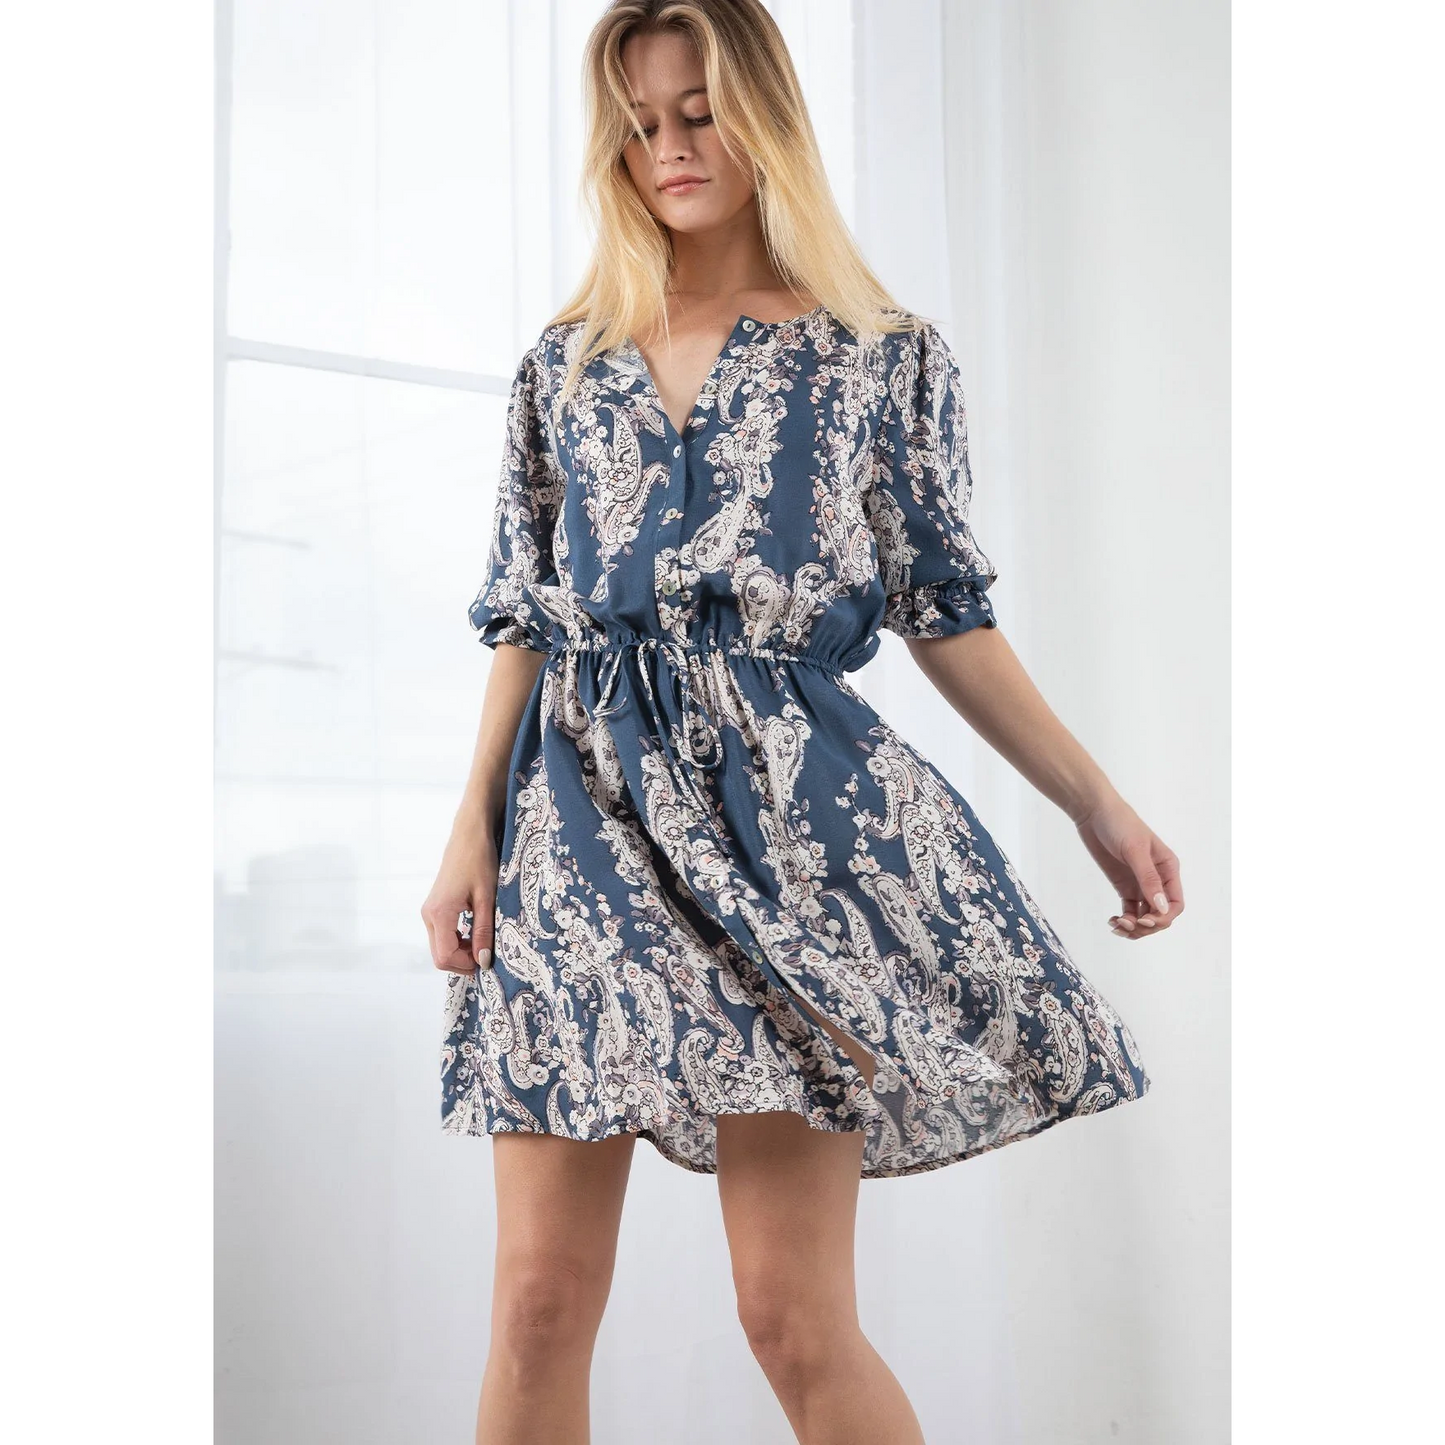 Poppy Print Dress - Fornire Boutique